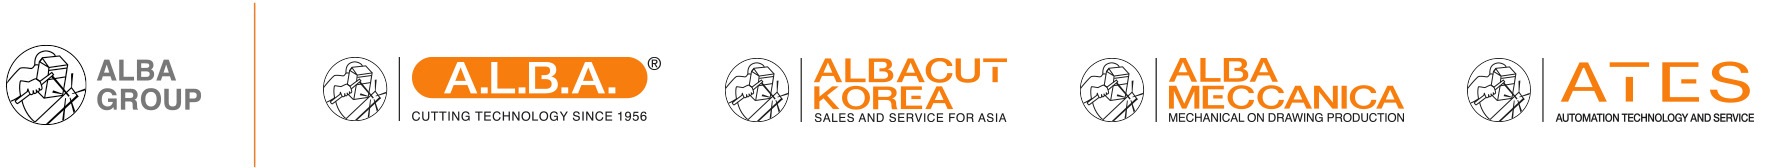 Albacut Korea Ltd.